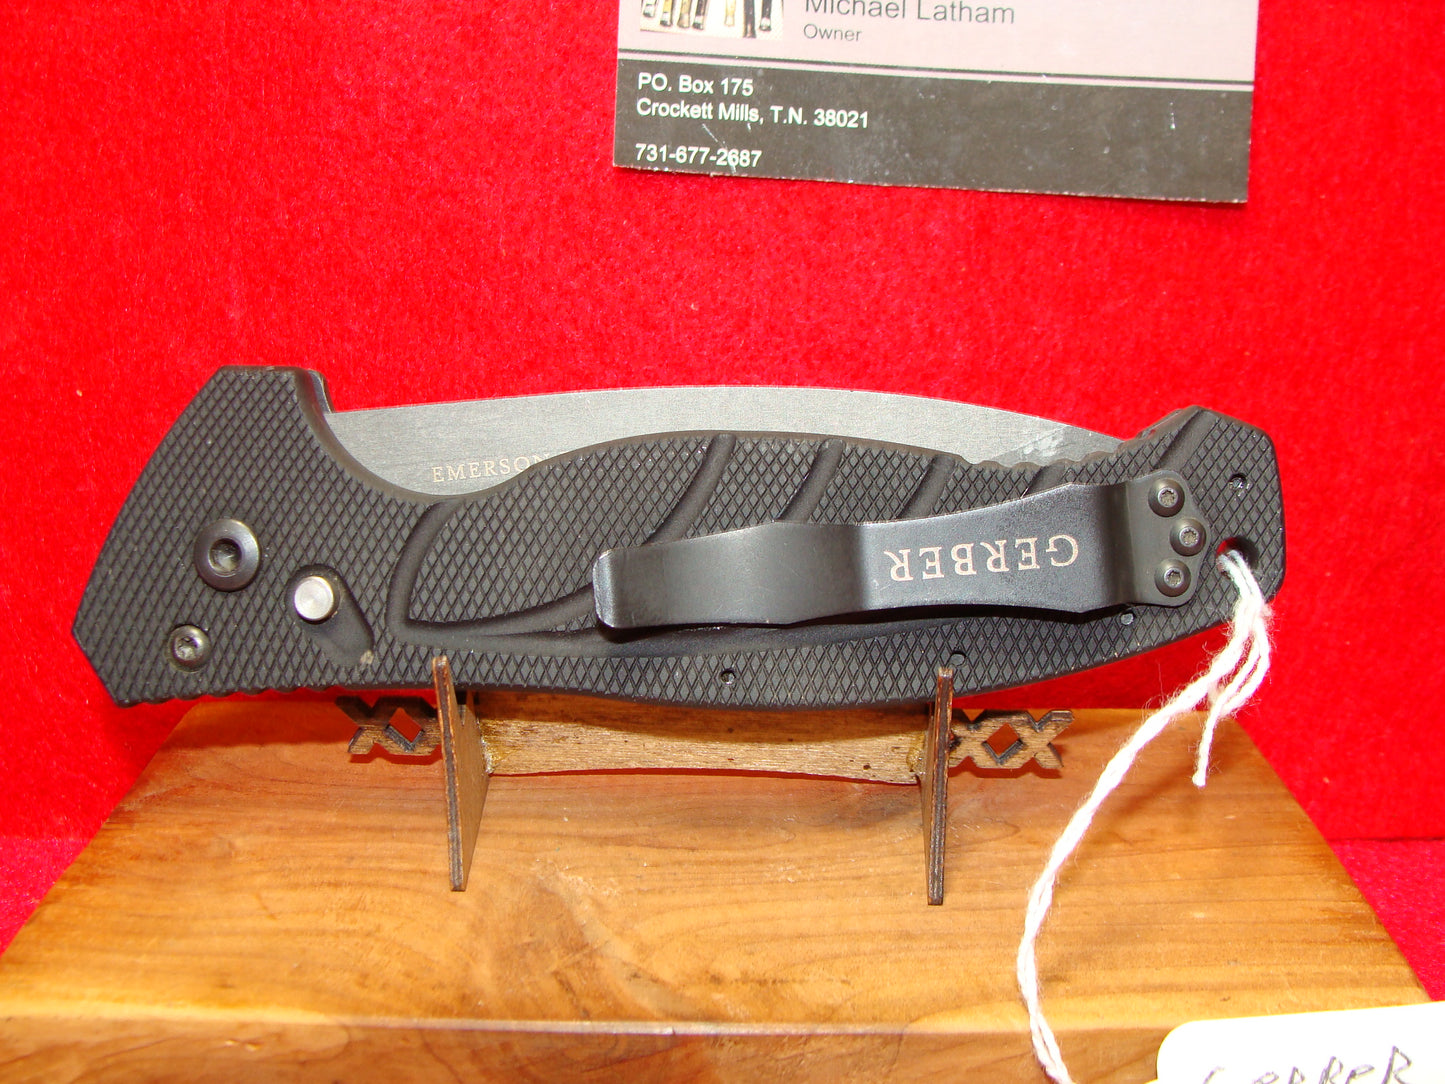 GERBER EMERSON DESIGN USA 1990-98 TACTICAL AUTOMATIC KNIFE 6061-T6 ALUMINUM HANDLES